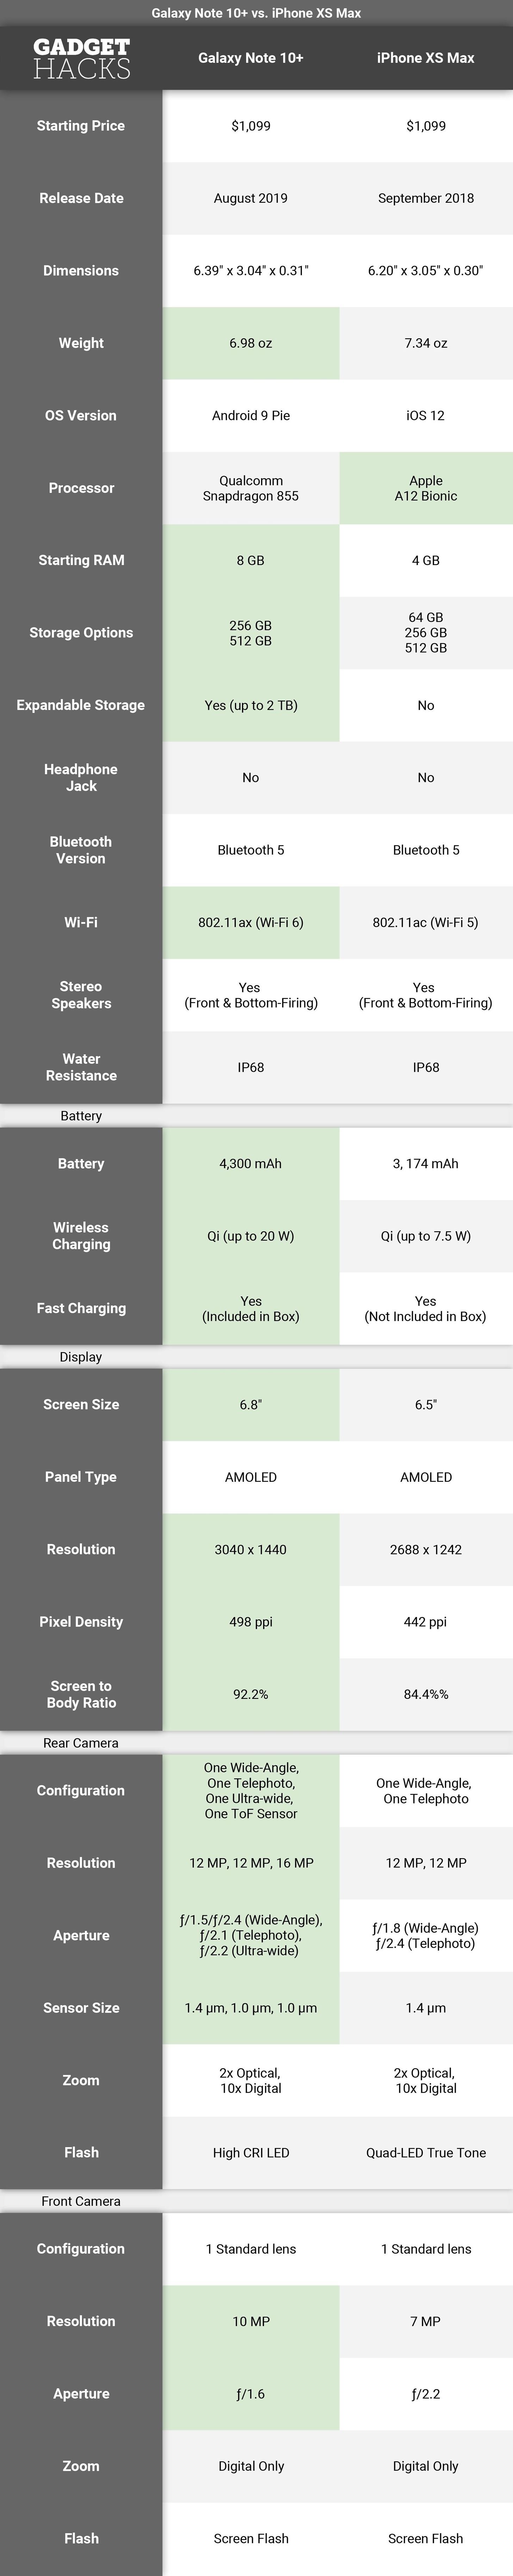 Samsung vs. Apple: Galaxy Note 10+ vs iPhone XS Max